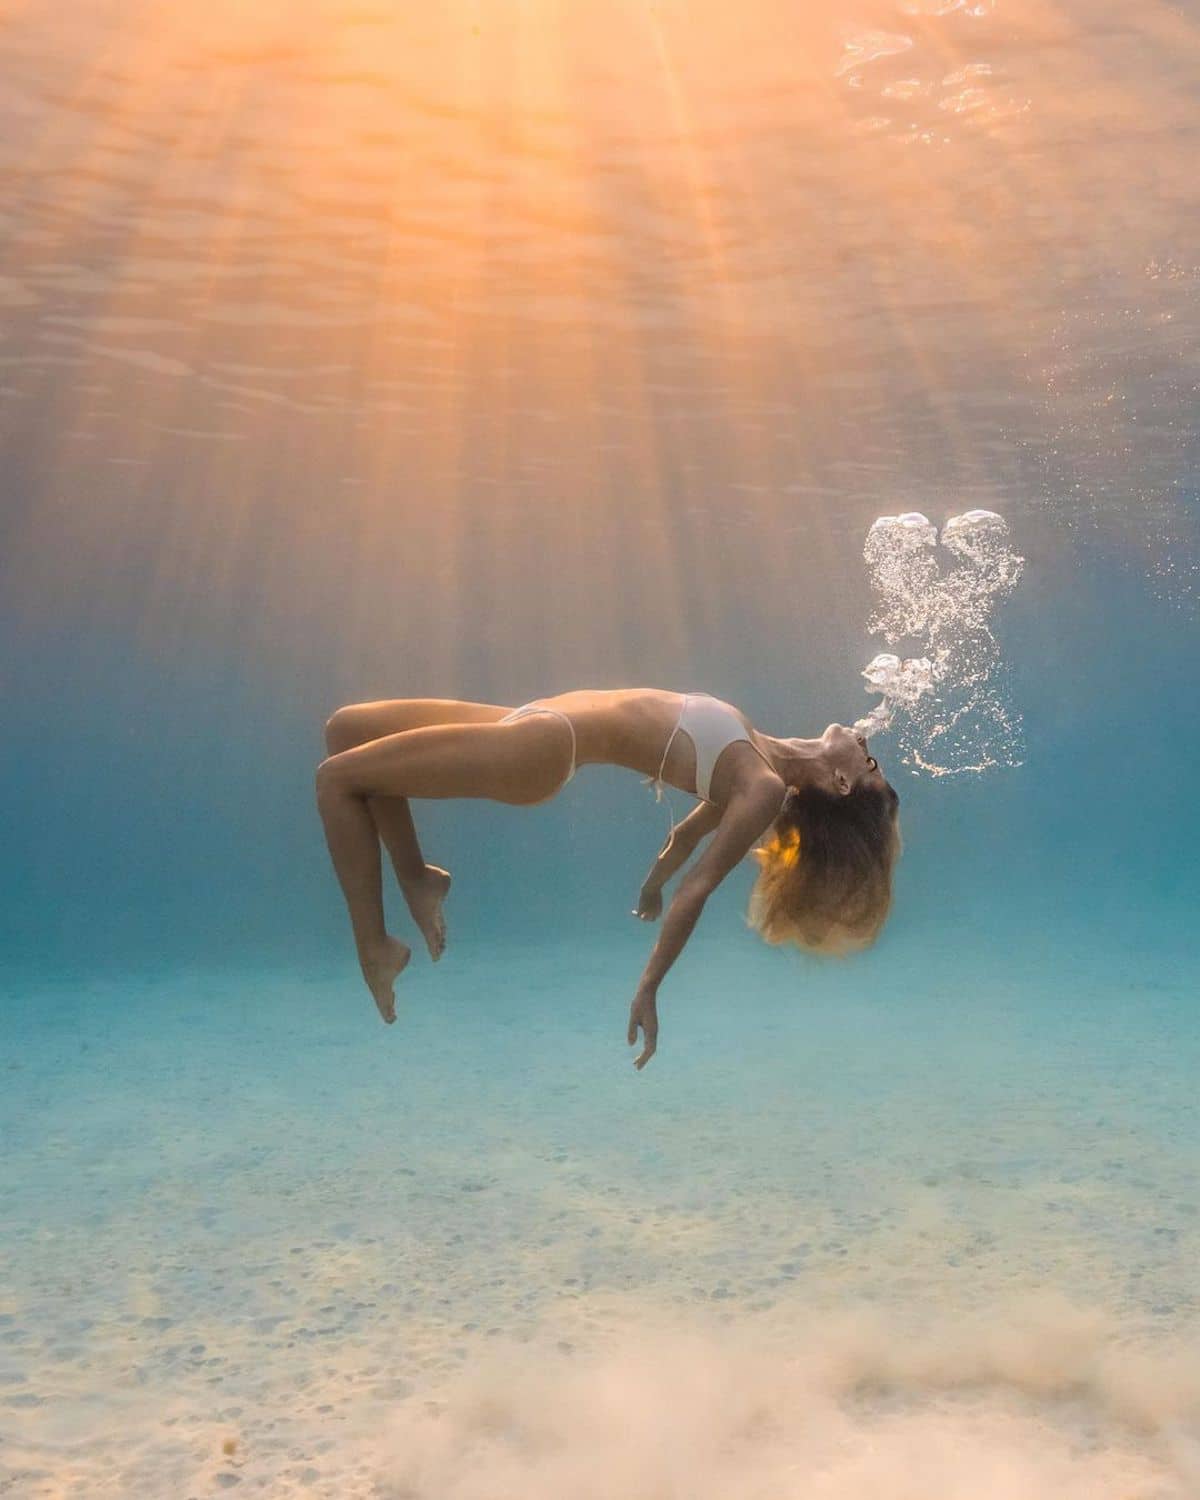 Surreal Ocean Photography by Dan Legend